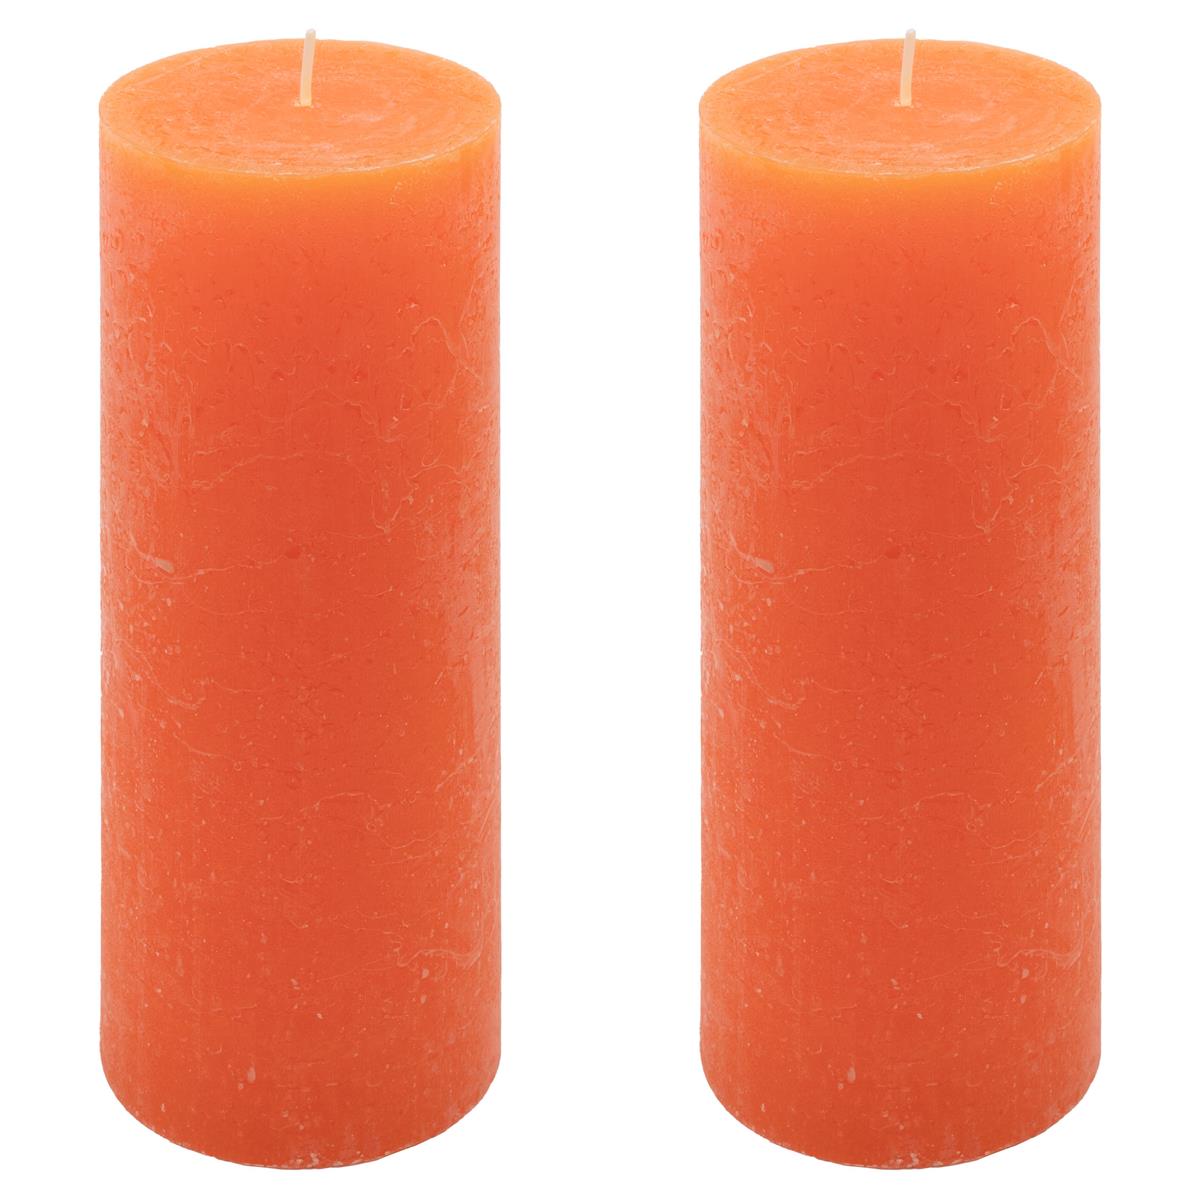 2er Set Rustik-Kerzen orange Höhe 20 cm Ø 7,5 cm lange Brenndauer Rund-Kerze